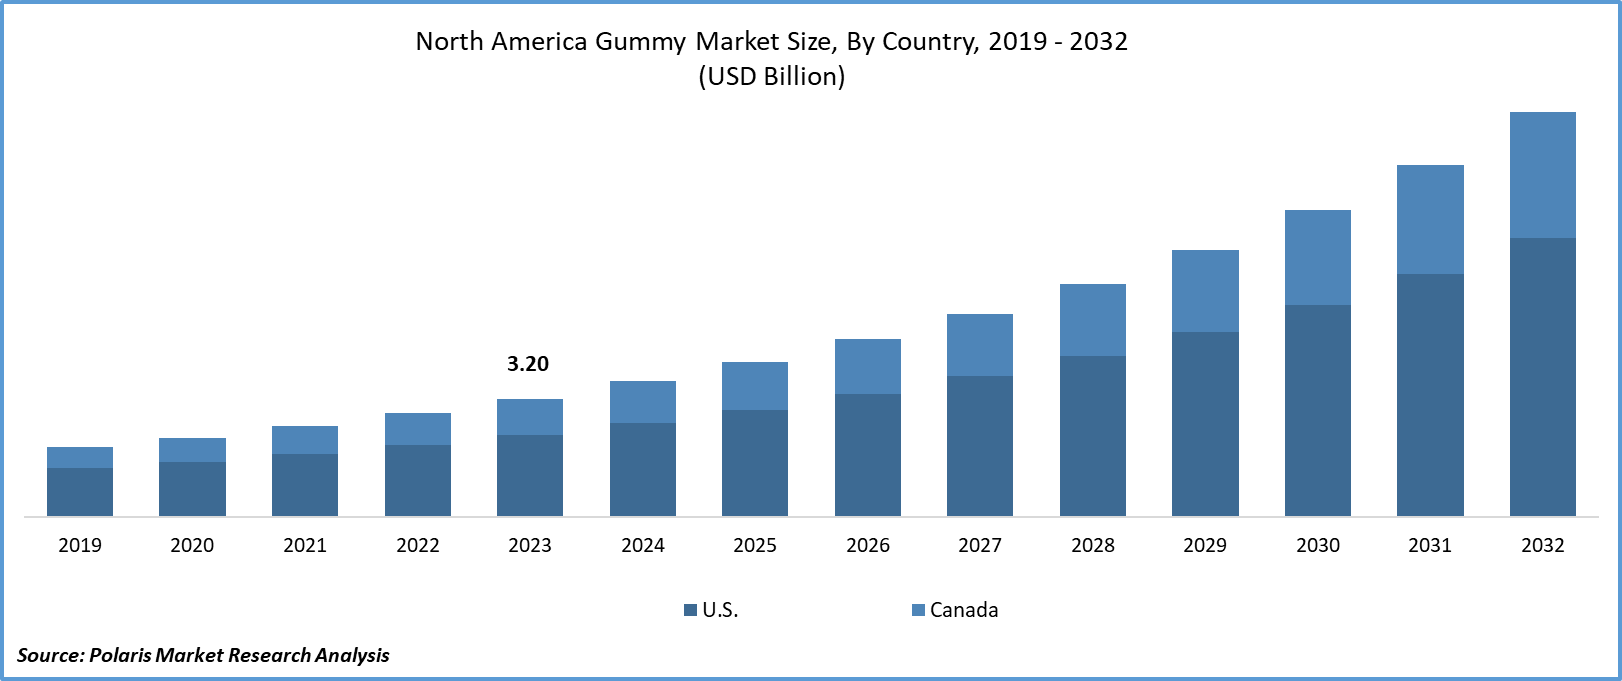 North America Gummy Market Size